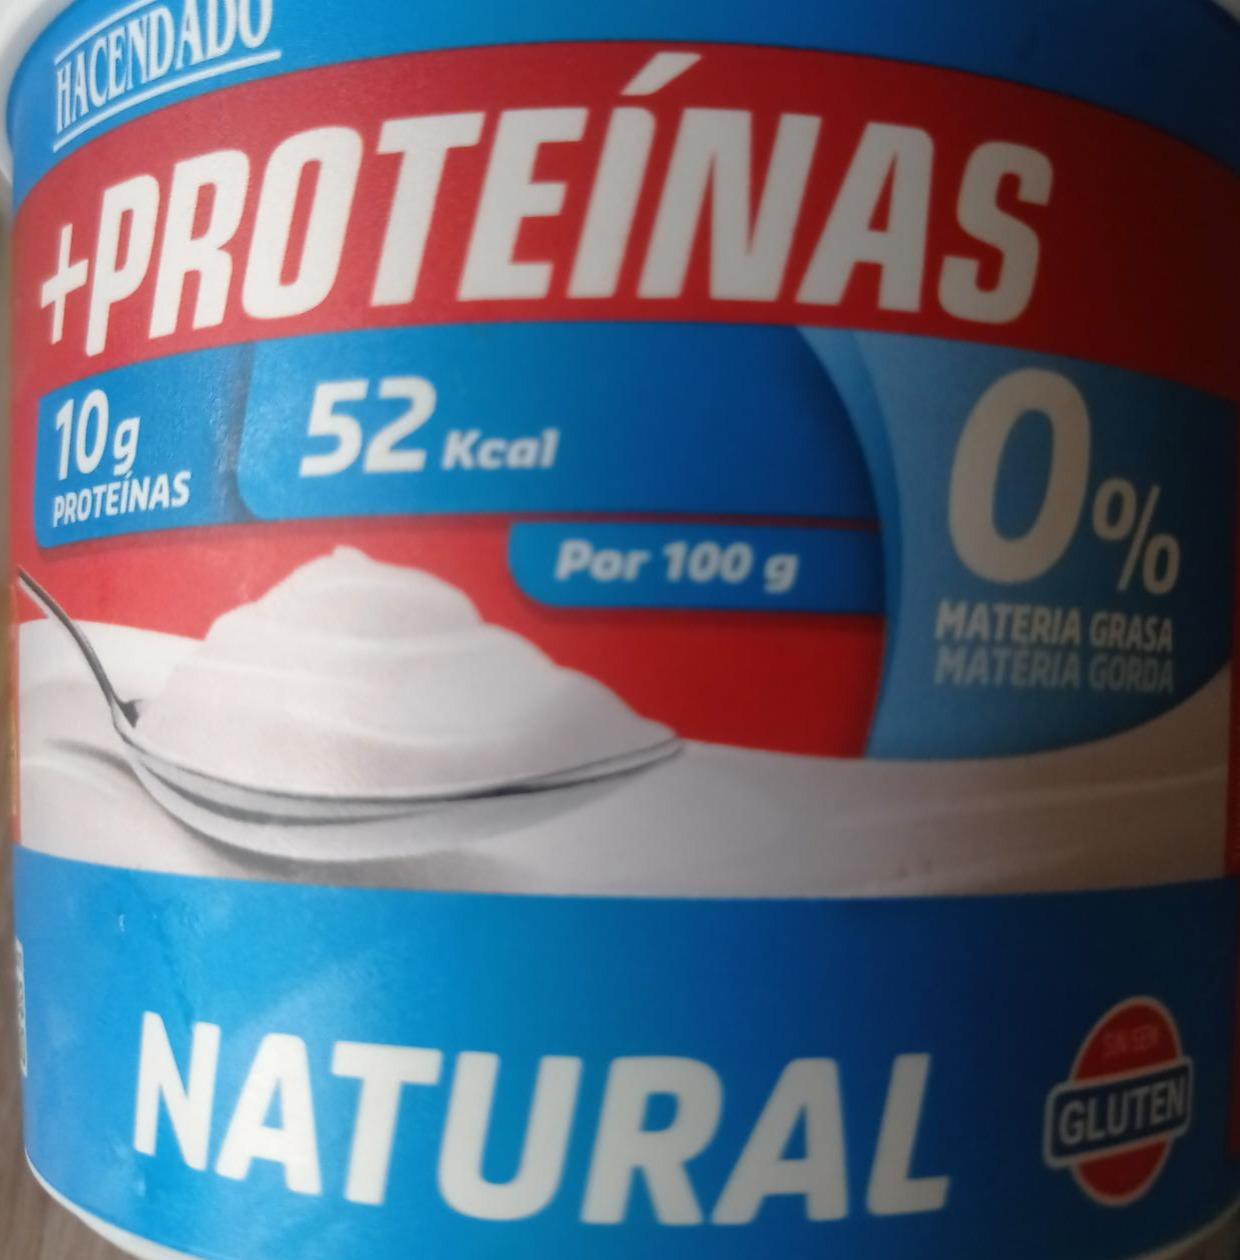 Фото - Postre lácteo +proteínas natural 0% m.g 10 g proteínas Hacendado